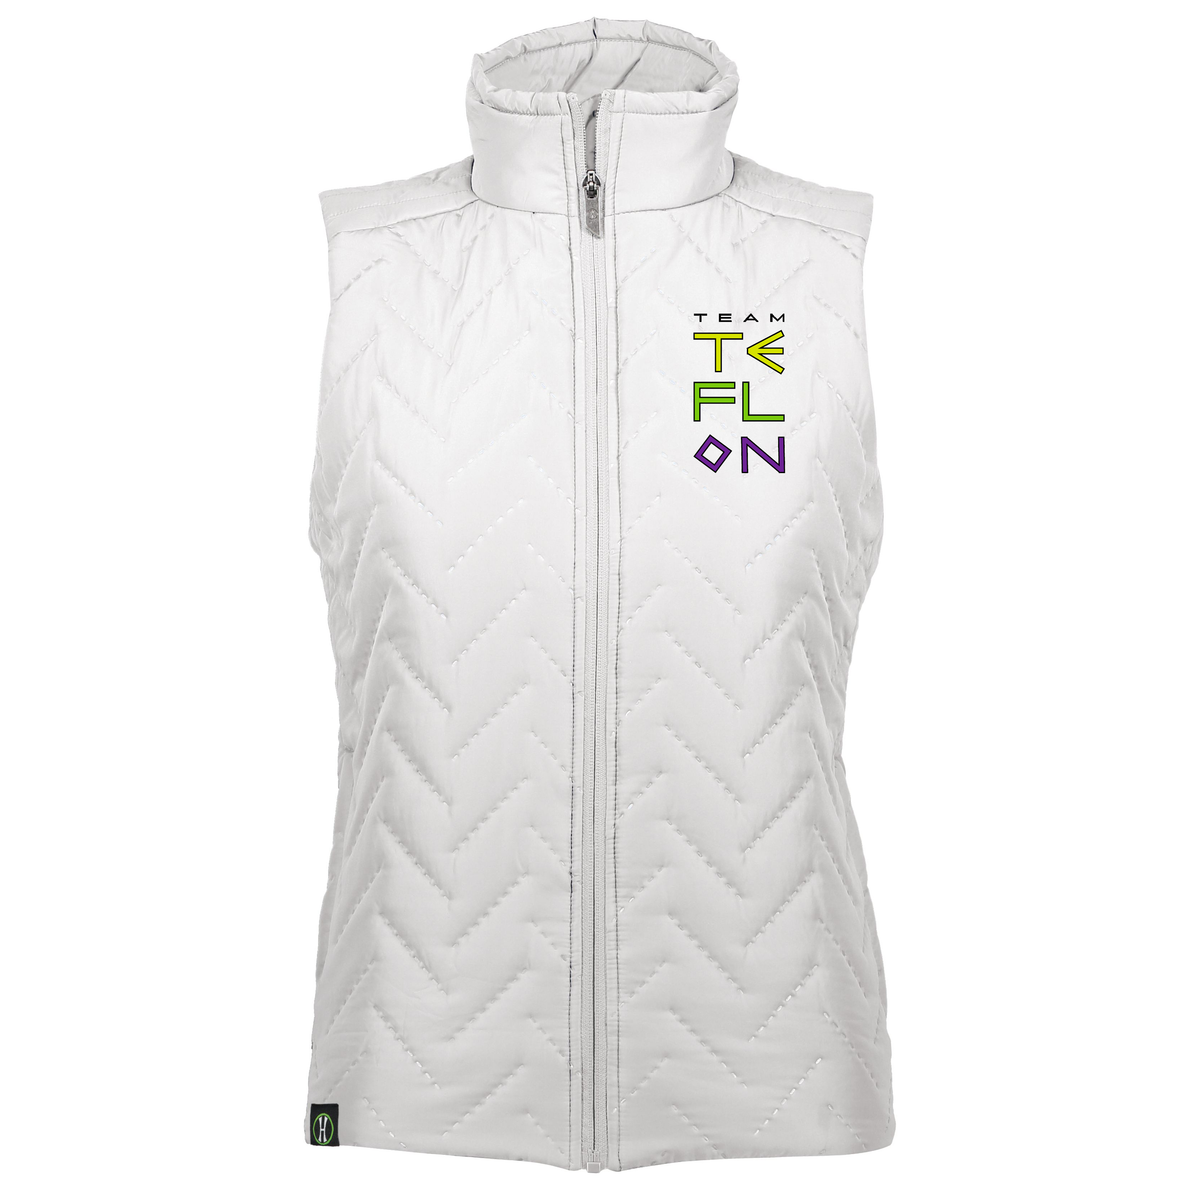 Team Teflon Softball Holloway Ladies Repreve Eco Vest